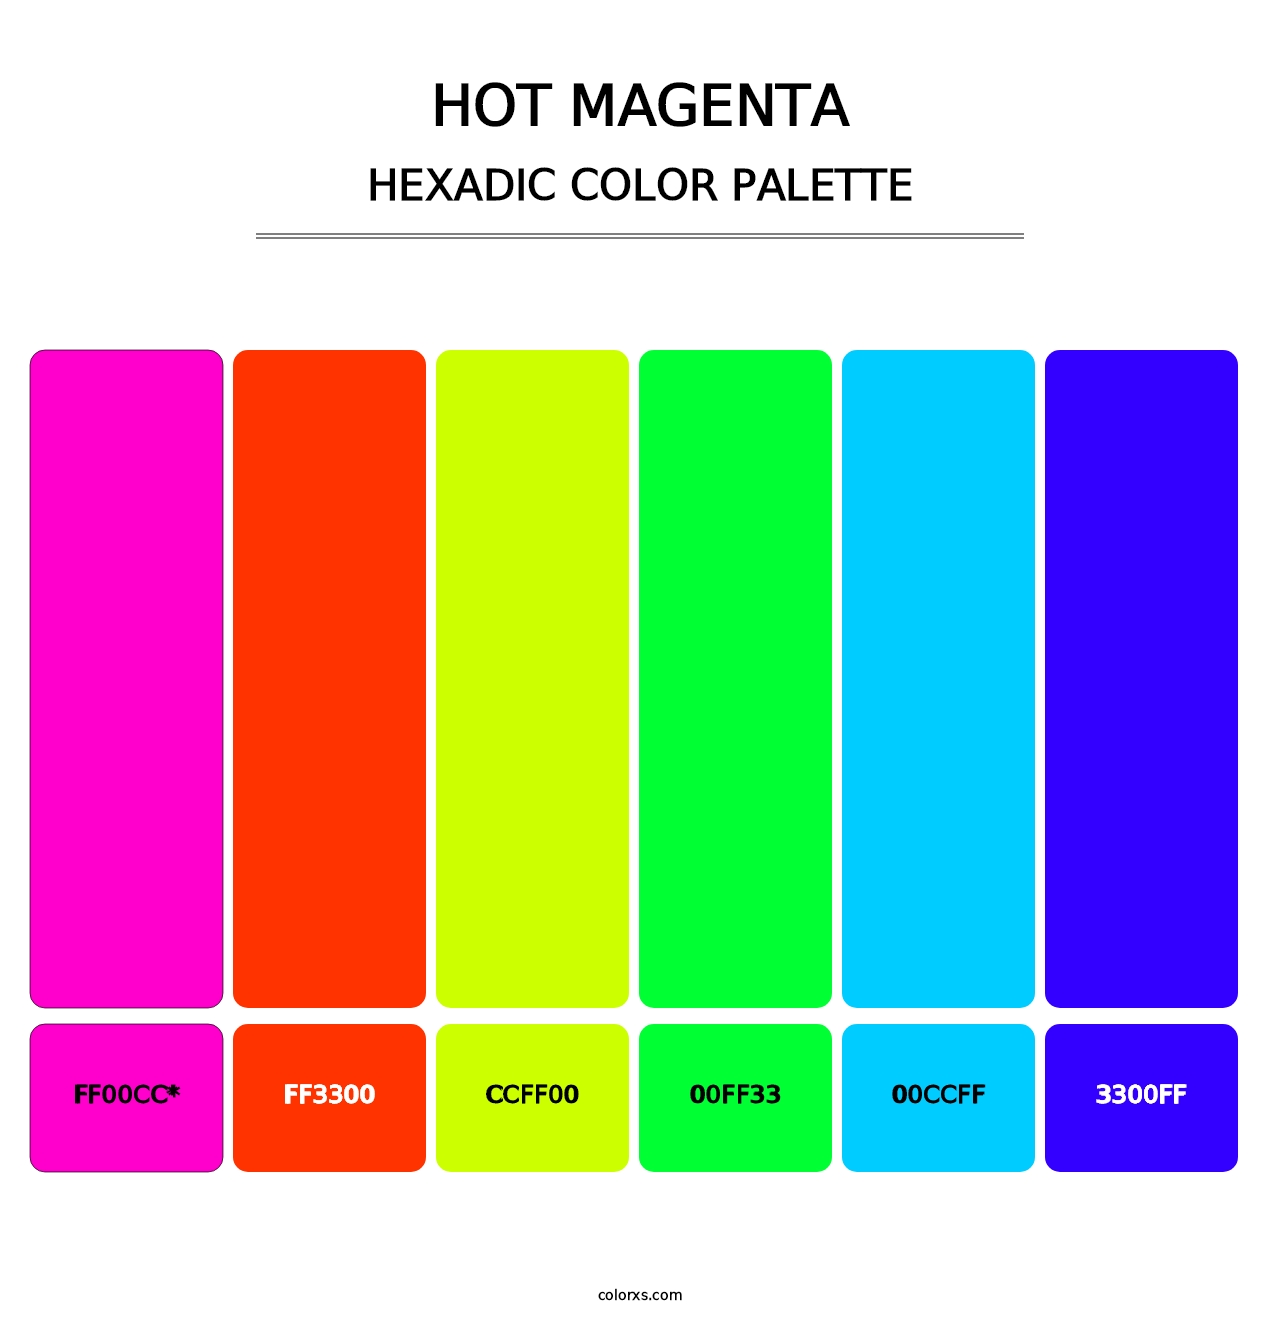 Hot Magenta - Hexadic Color Palette